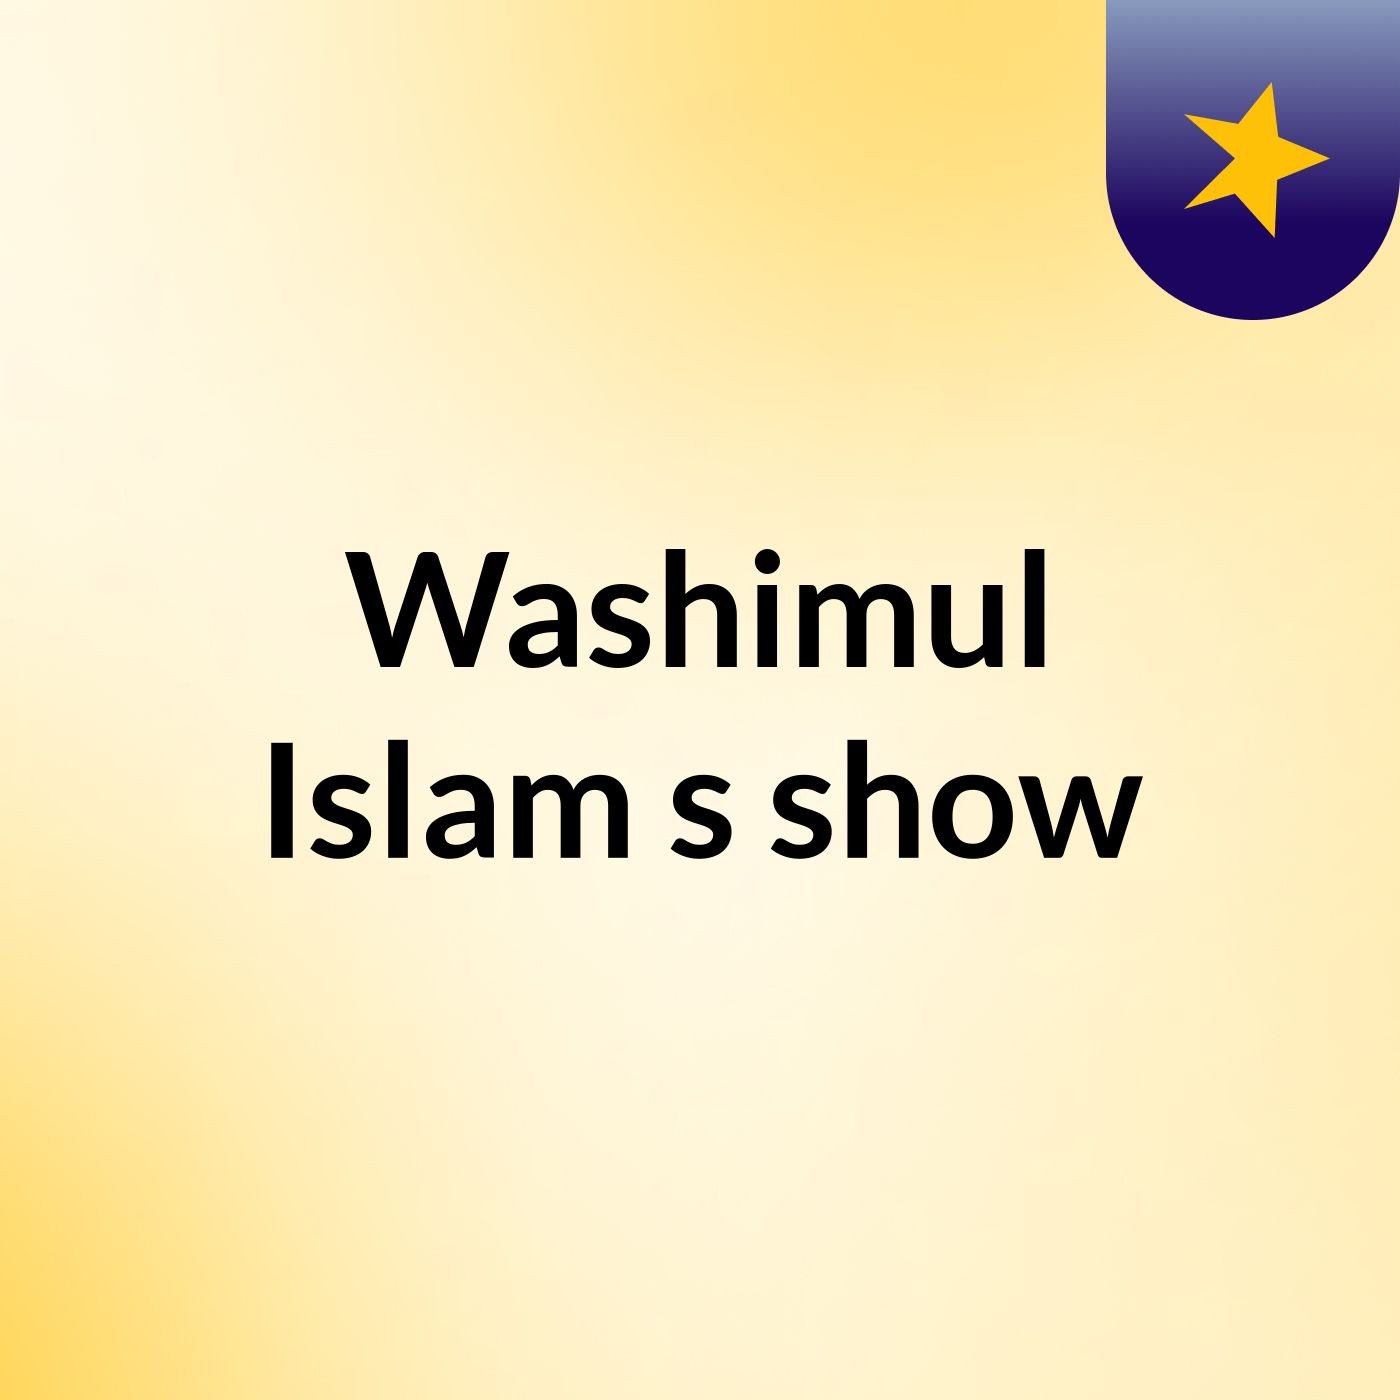 Washimul Islam's show